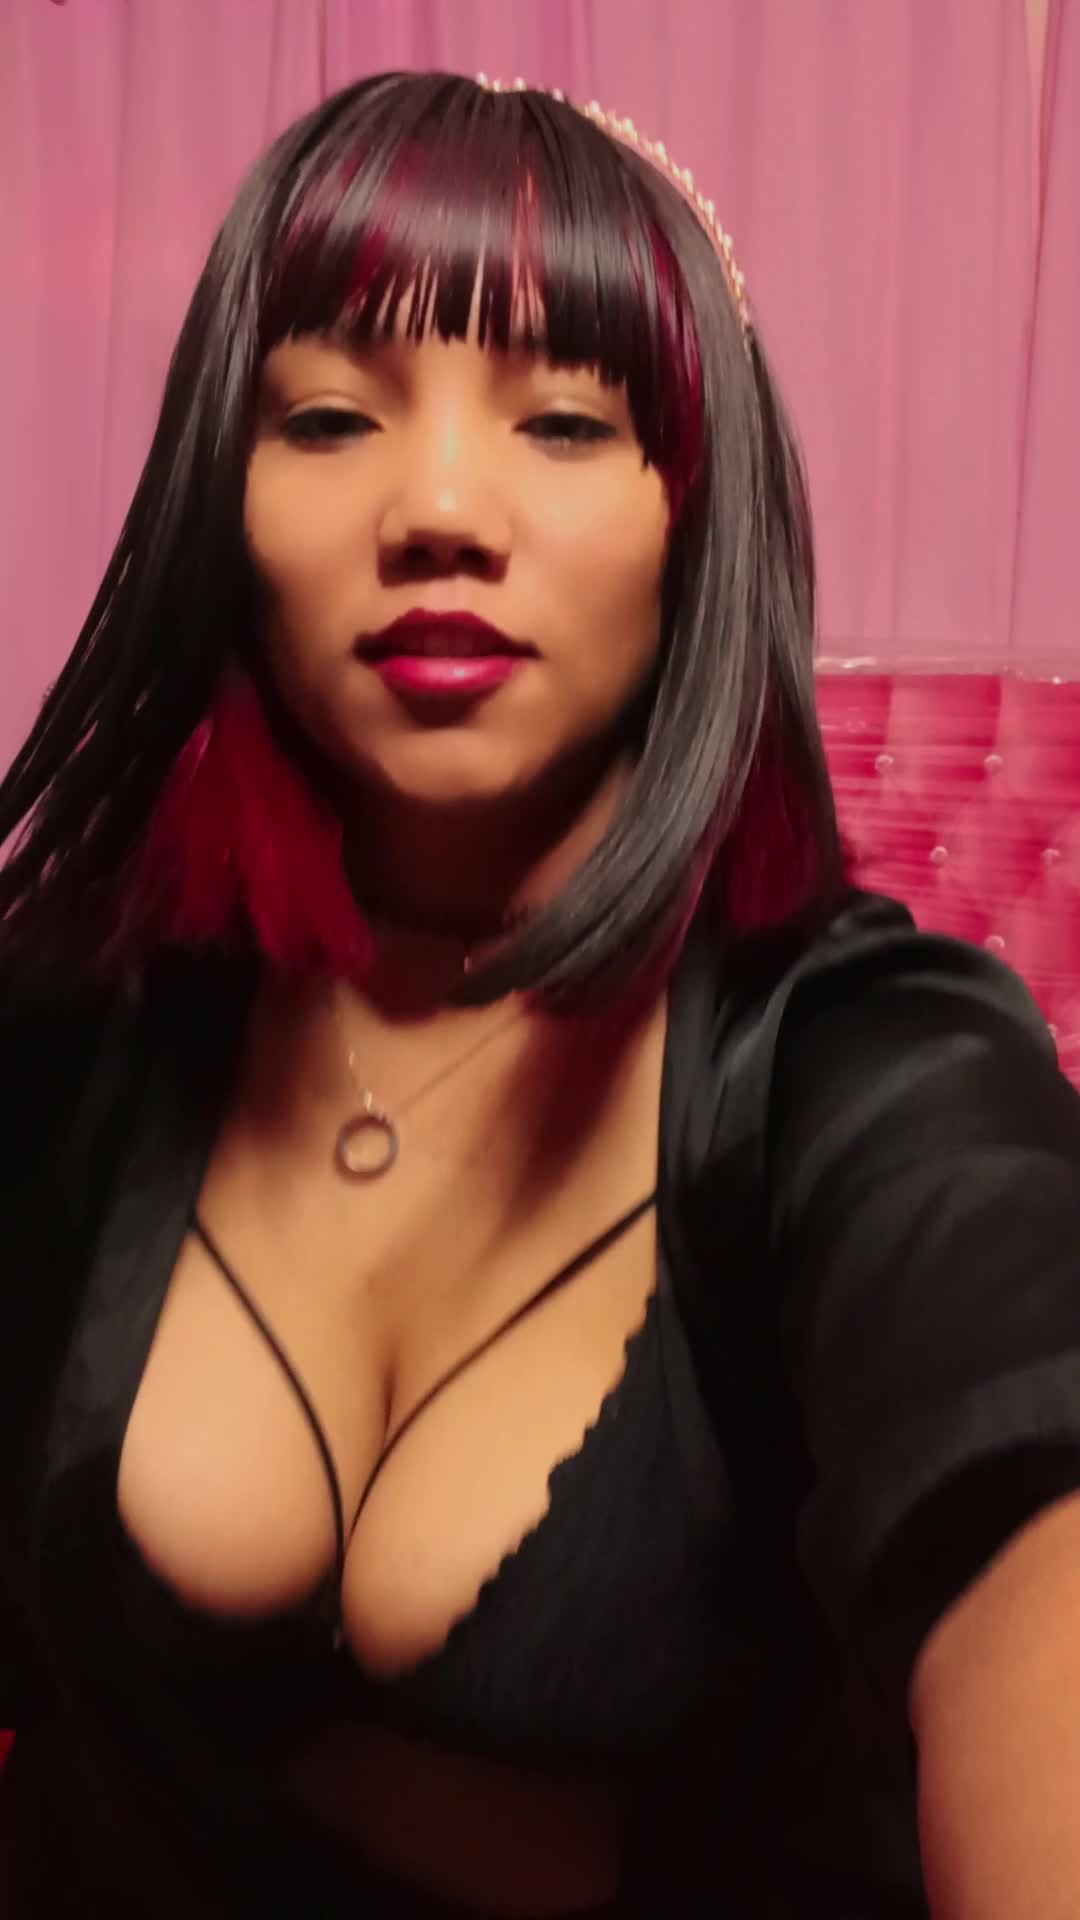 Video post by Asian-Latina bombshell